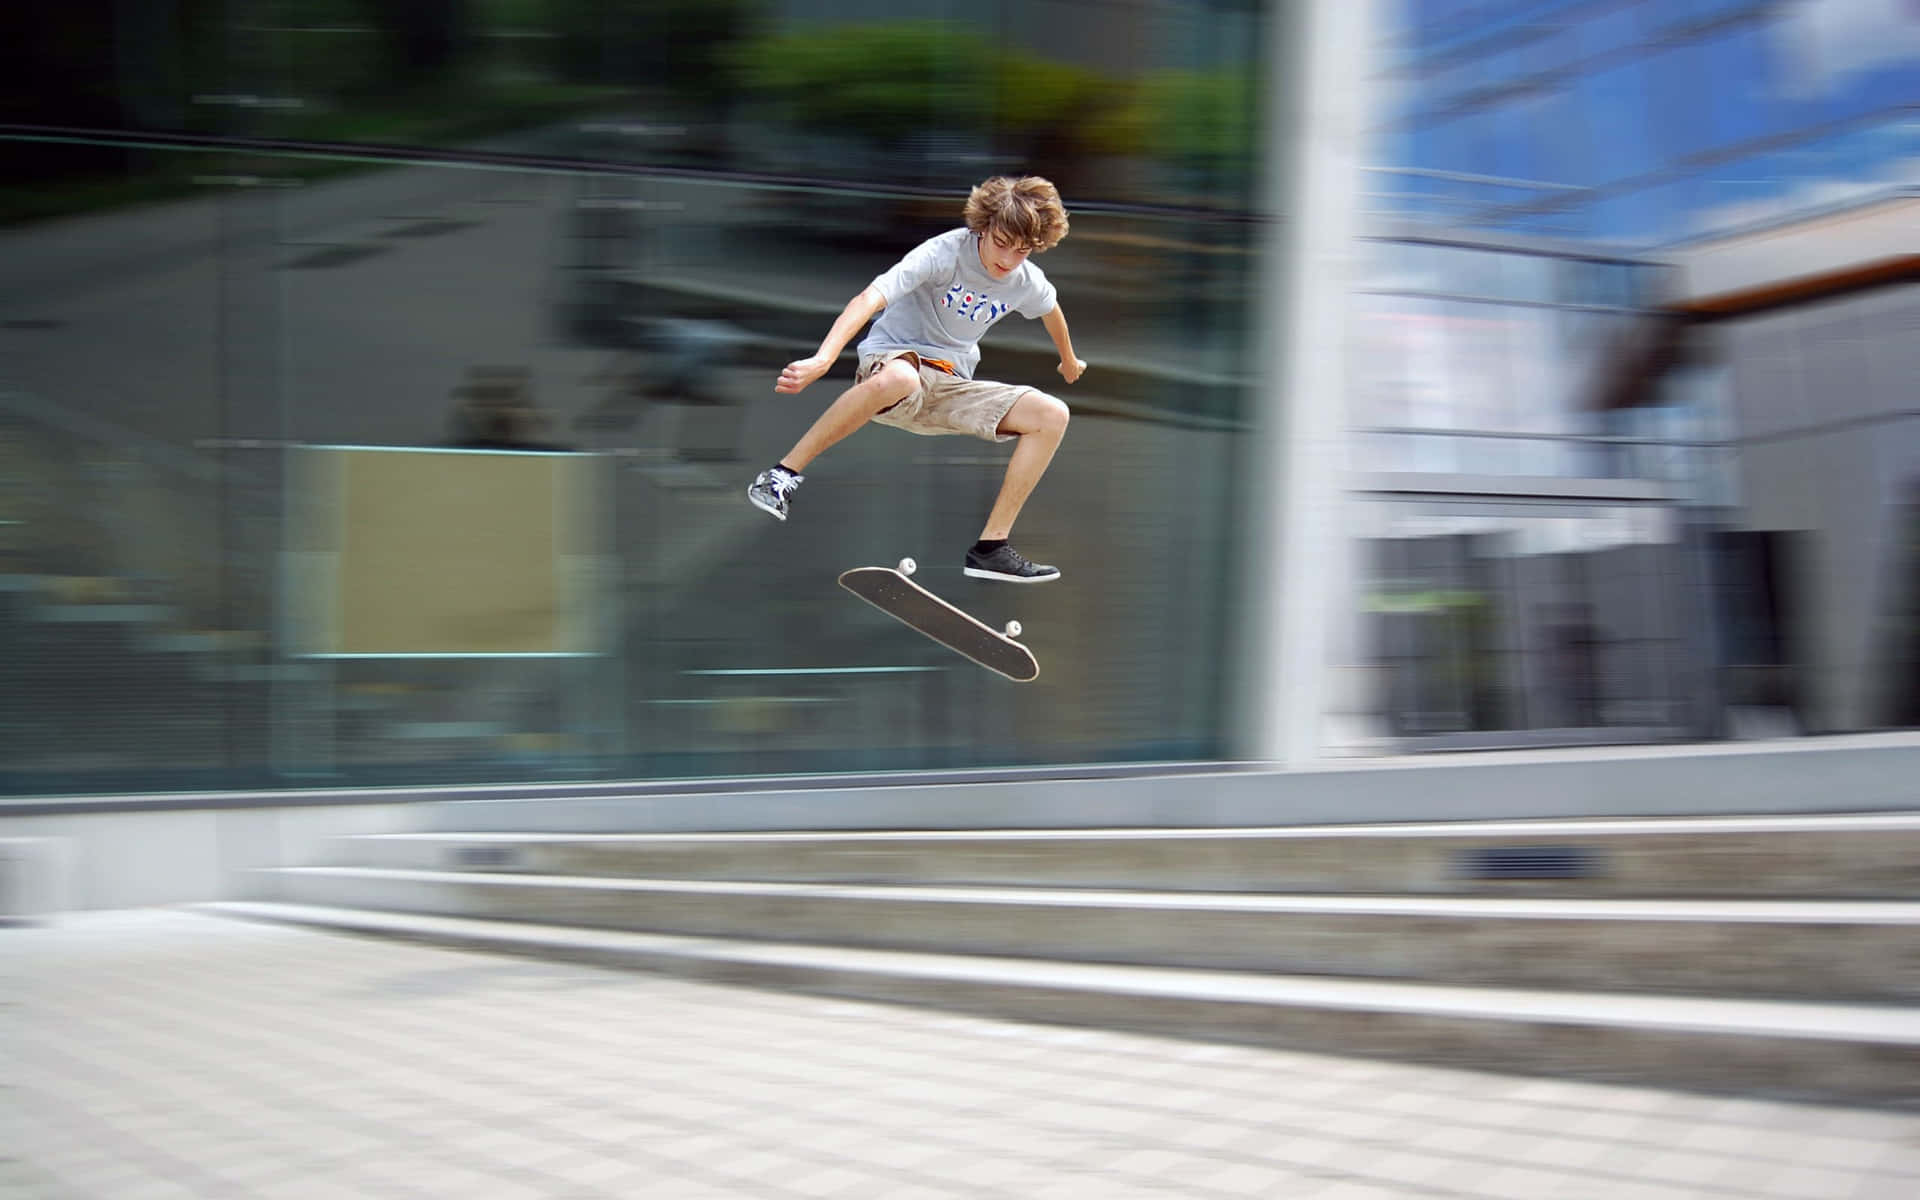 Urban Skateboard Jump Motion Blur Wallpaper